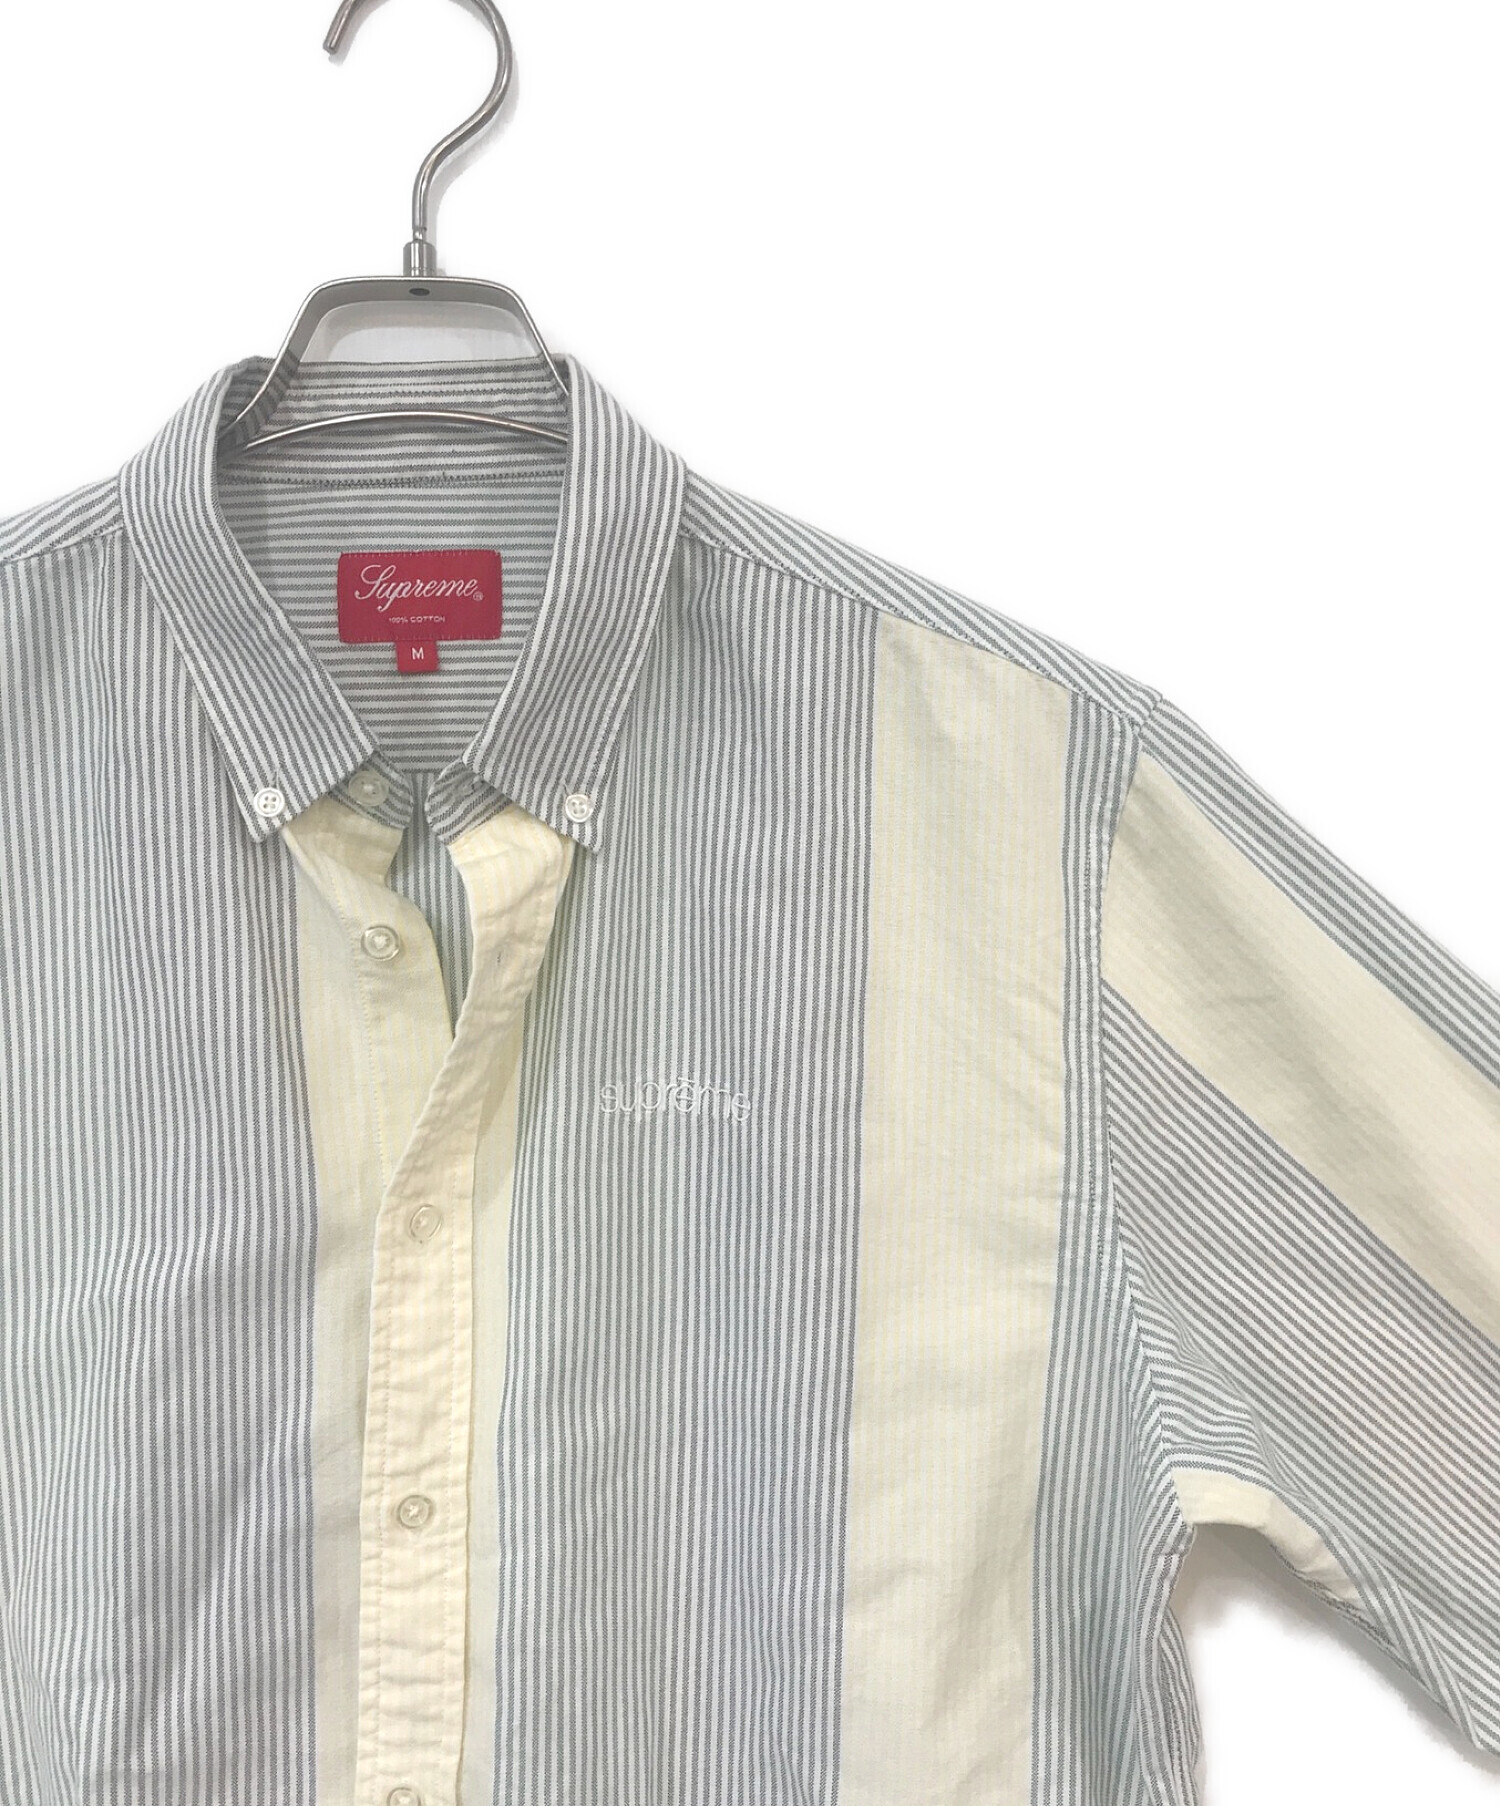 Supreme button down shirt オックスフォード - シャツ